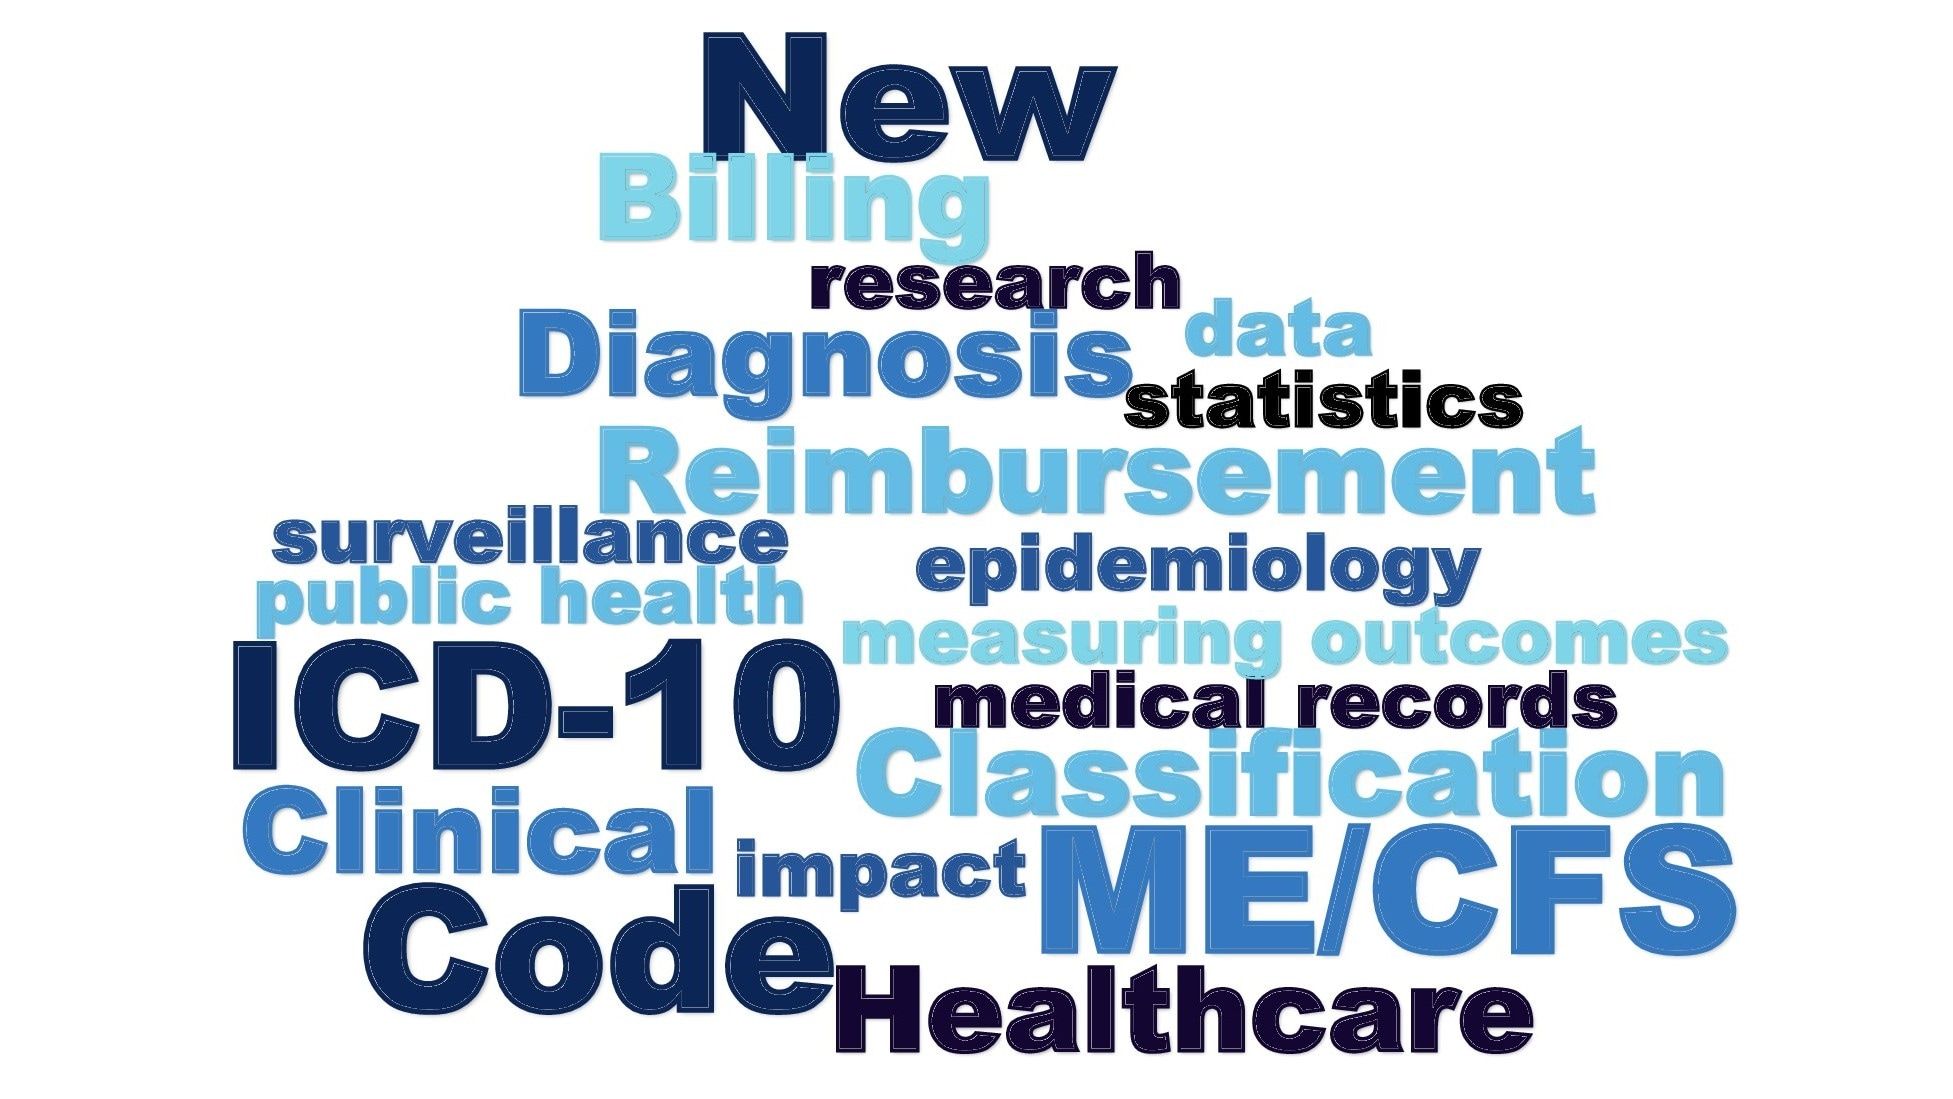 ICD-10-CM Codes